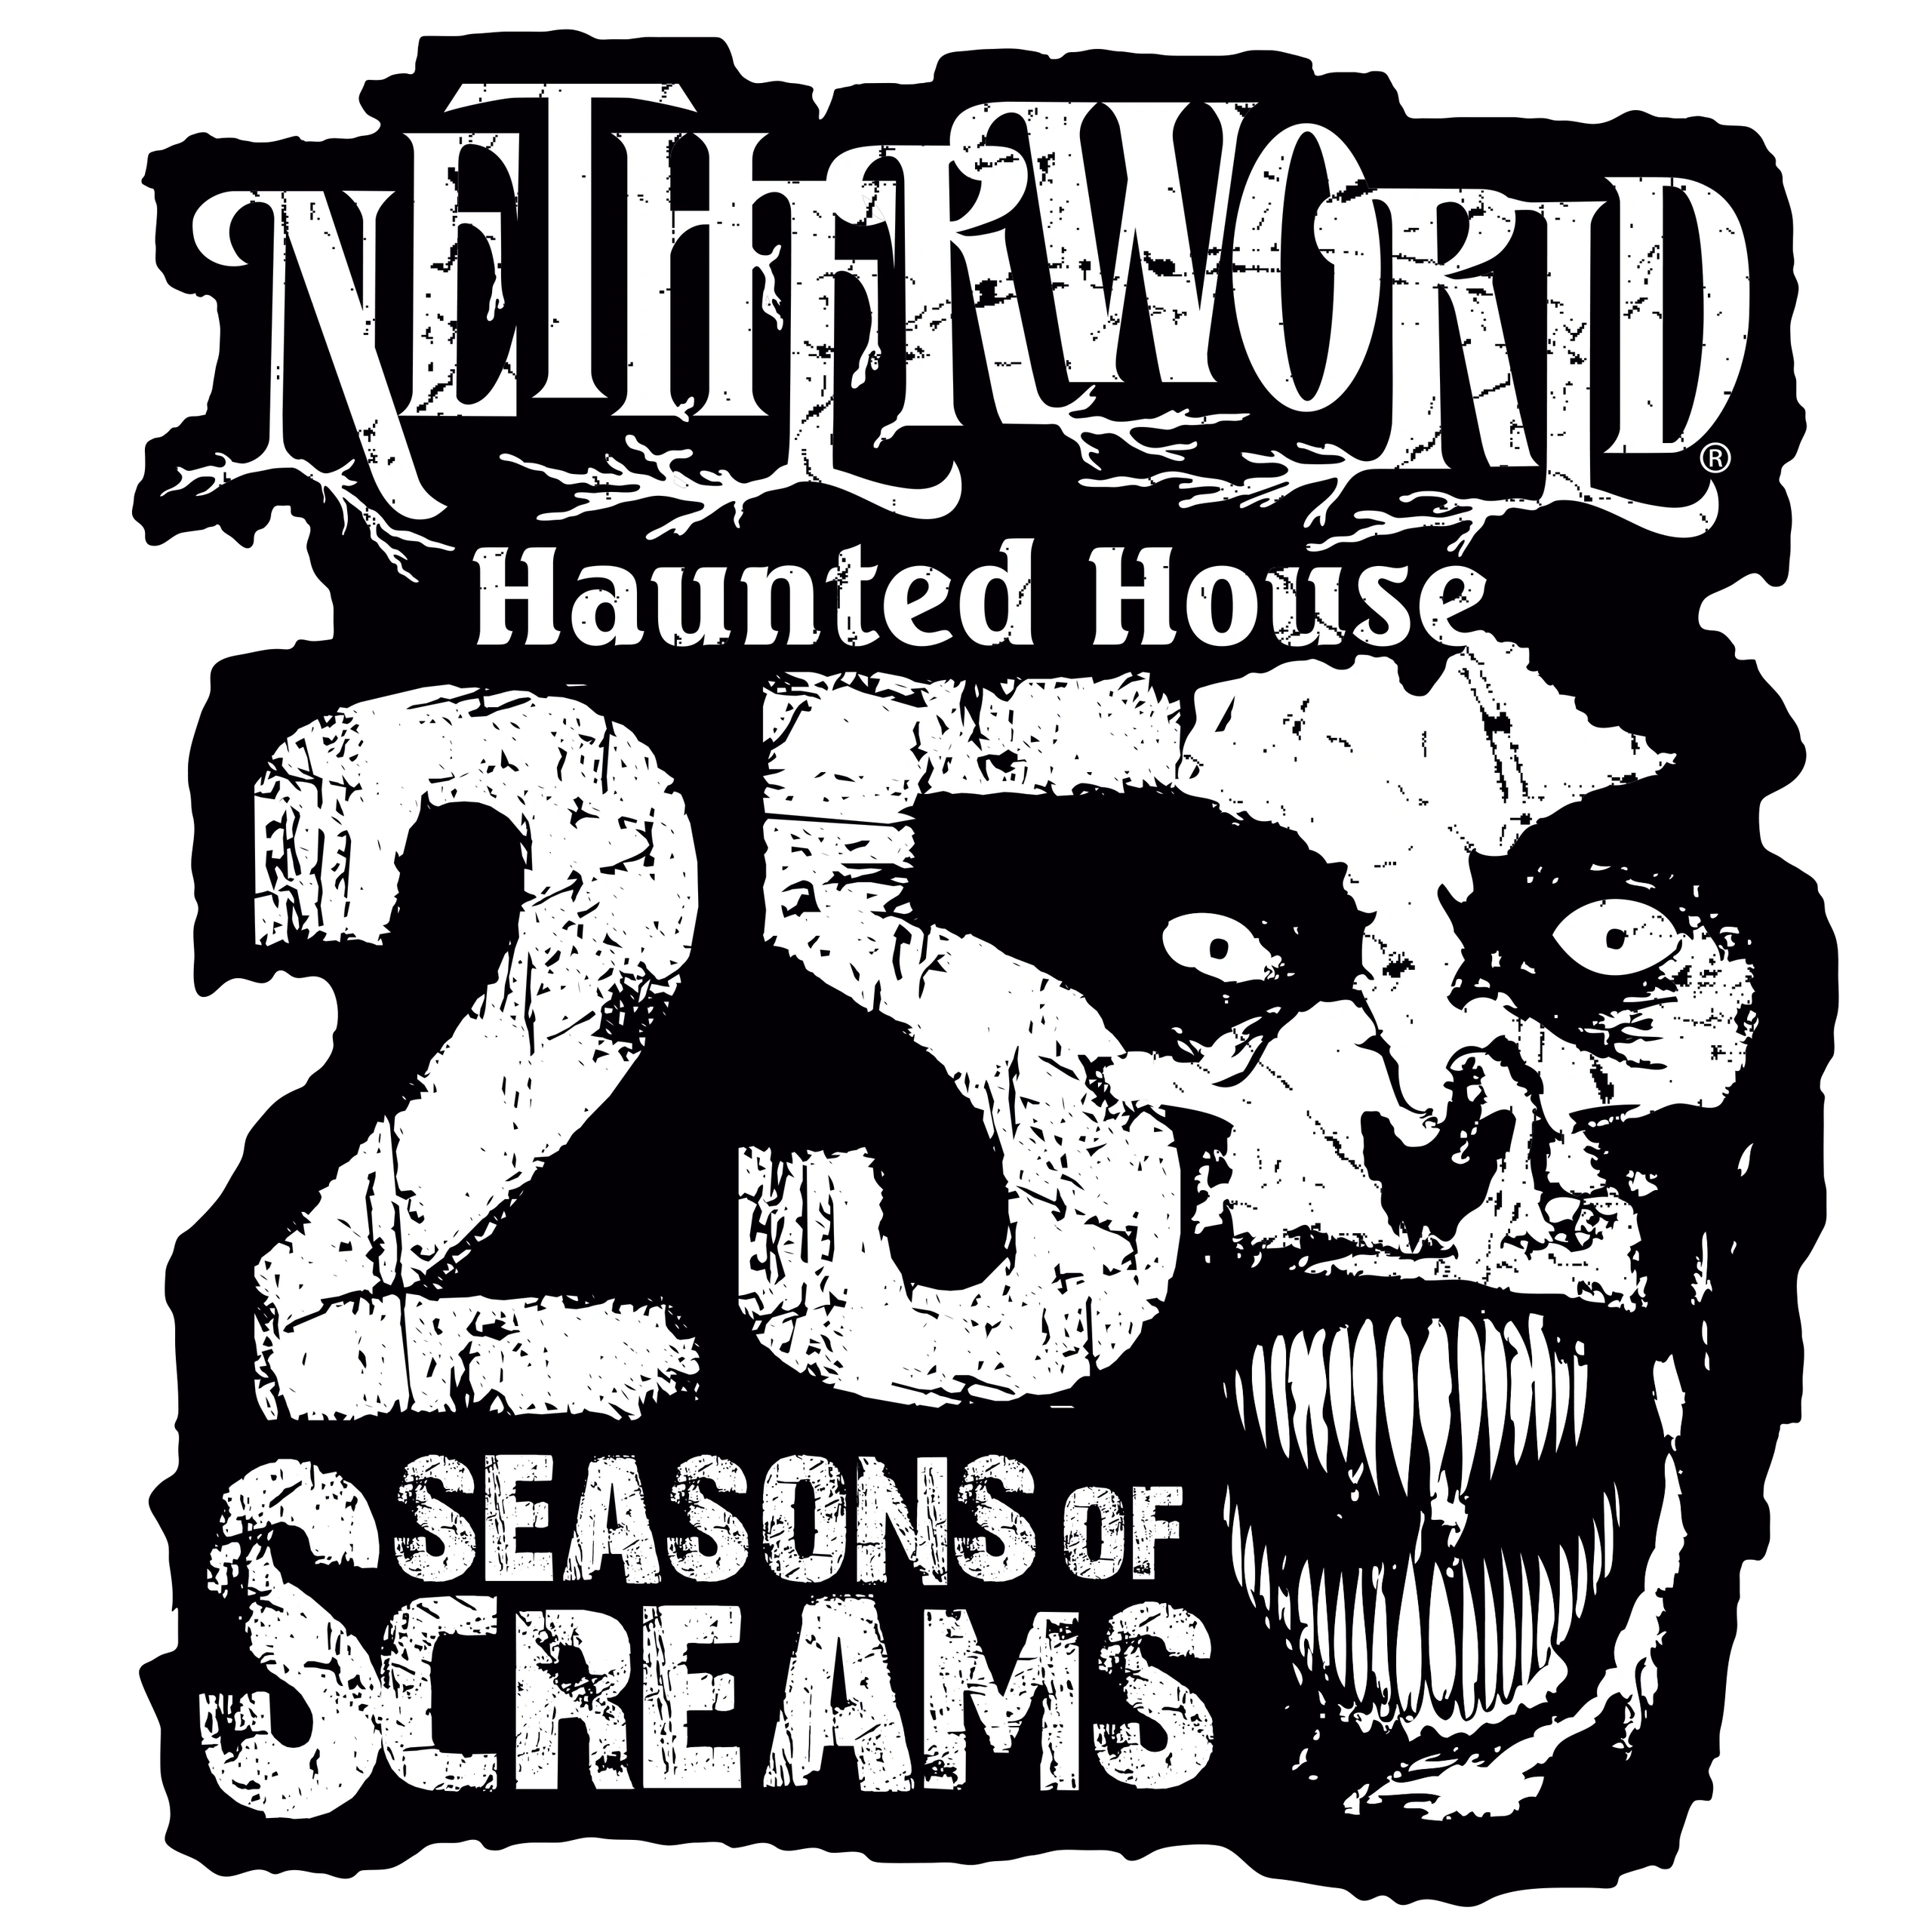 The Nightmare King! - Netherworld Haunted House